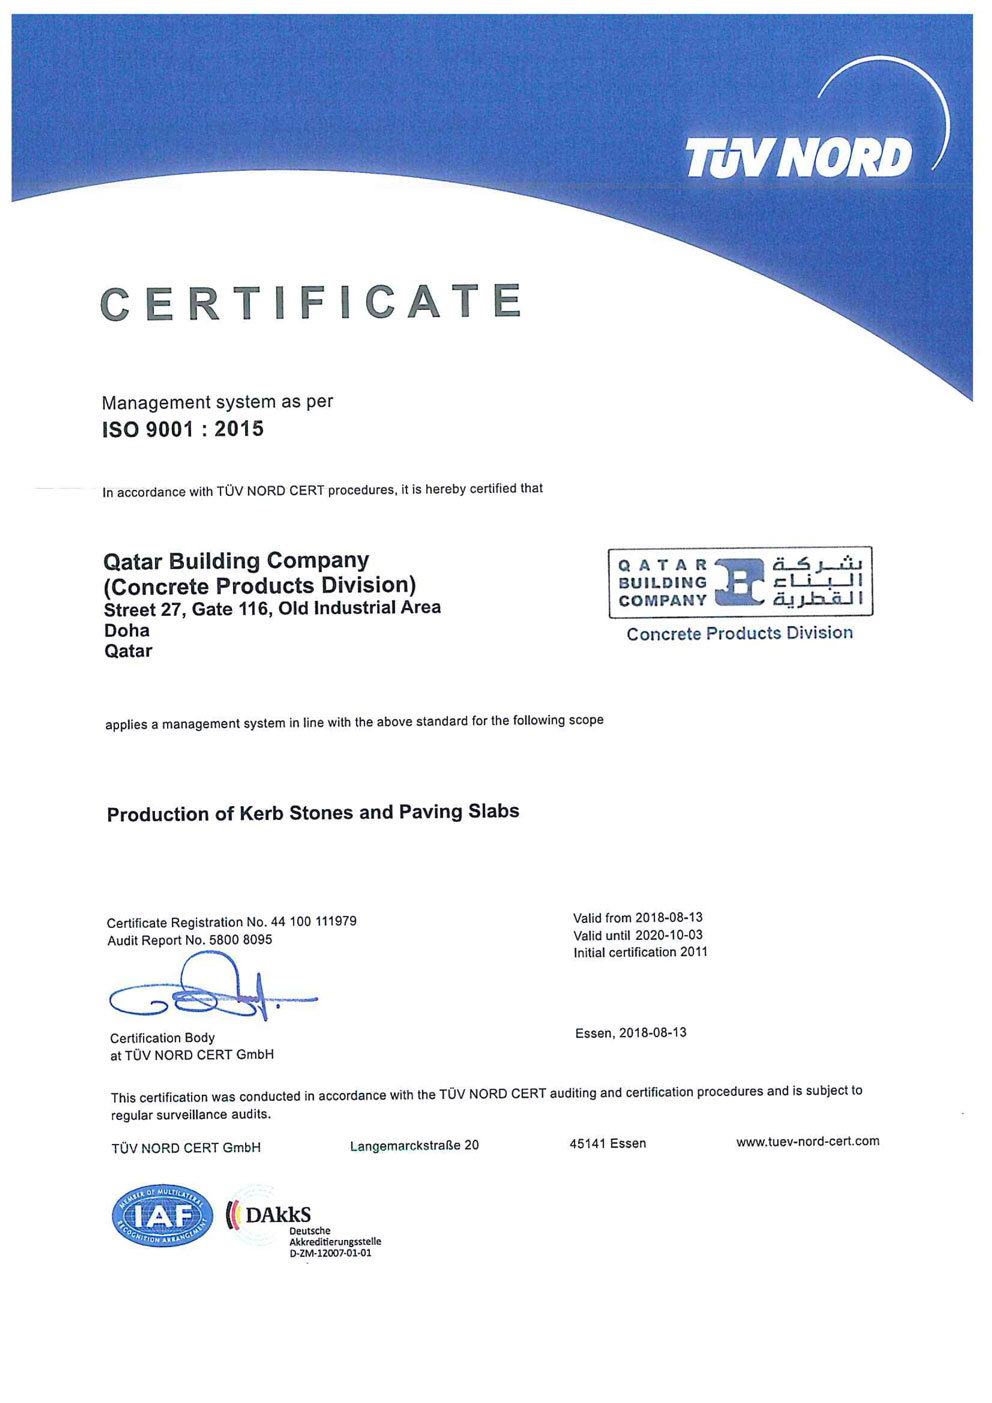 Qatar-Building-Company-ISO-9001-2015